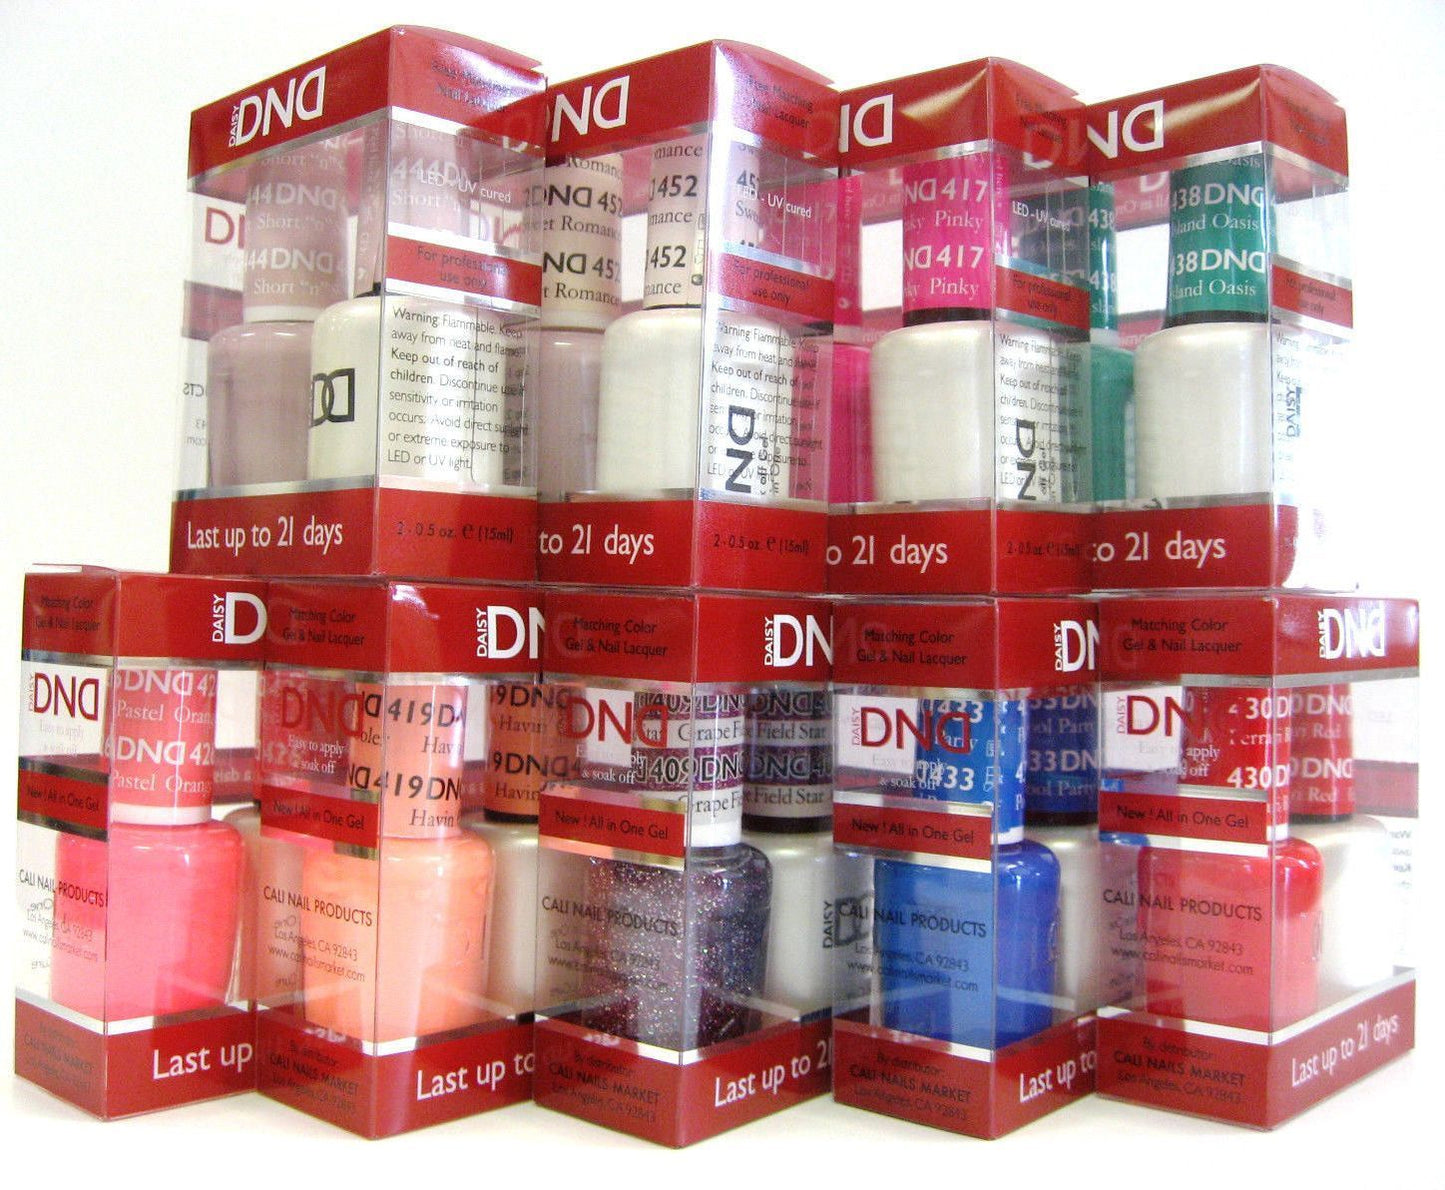 DND Duo - Soak Off GEL + MATCHING Nail Polish Colors SET - Choose Your Colors